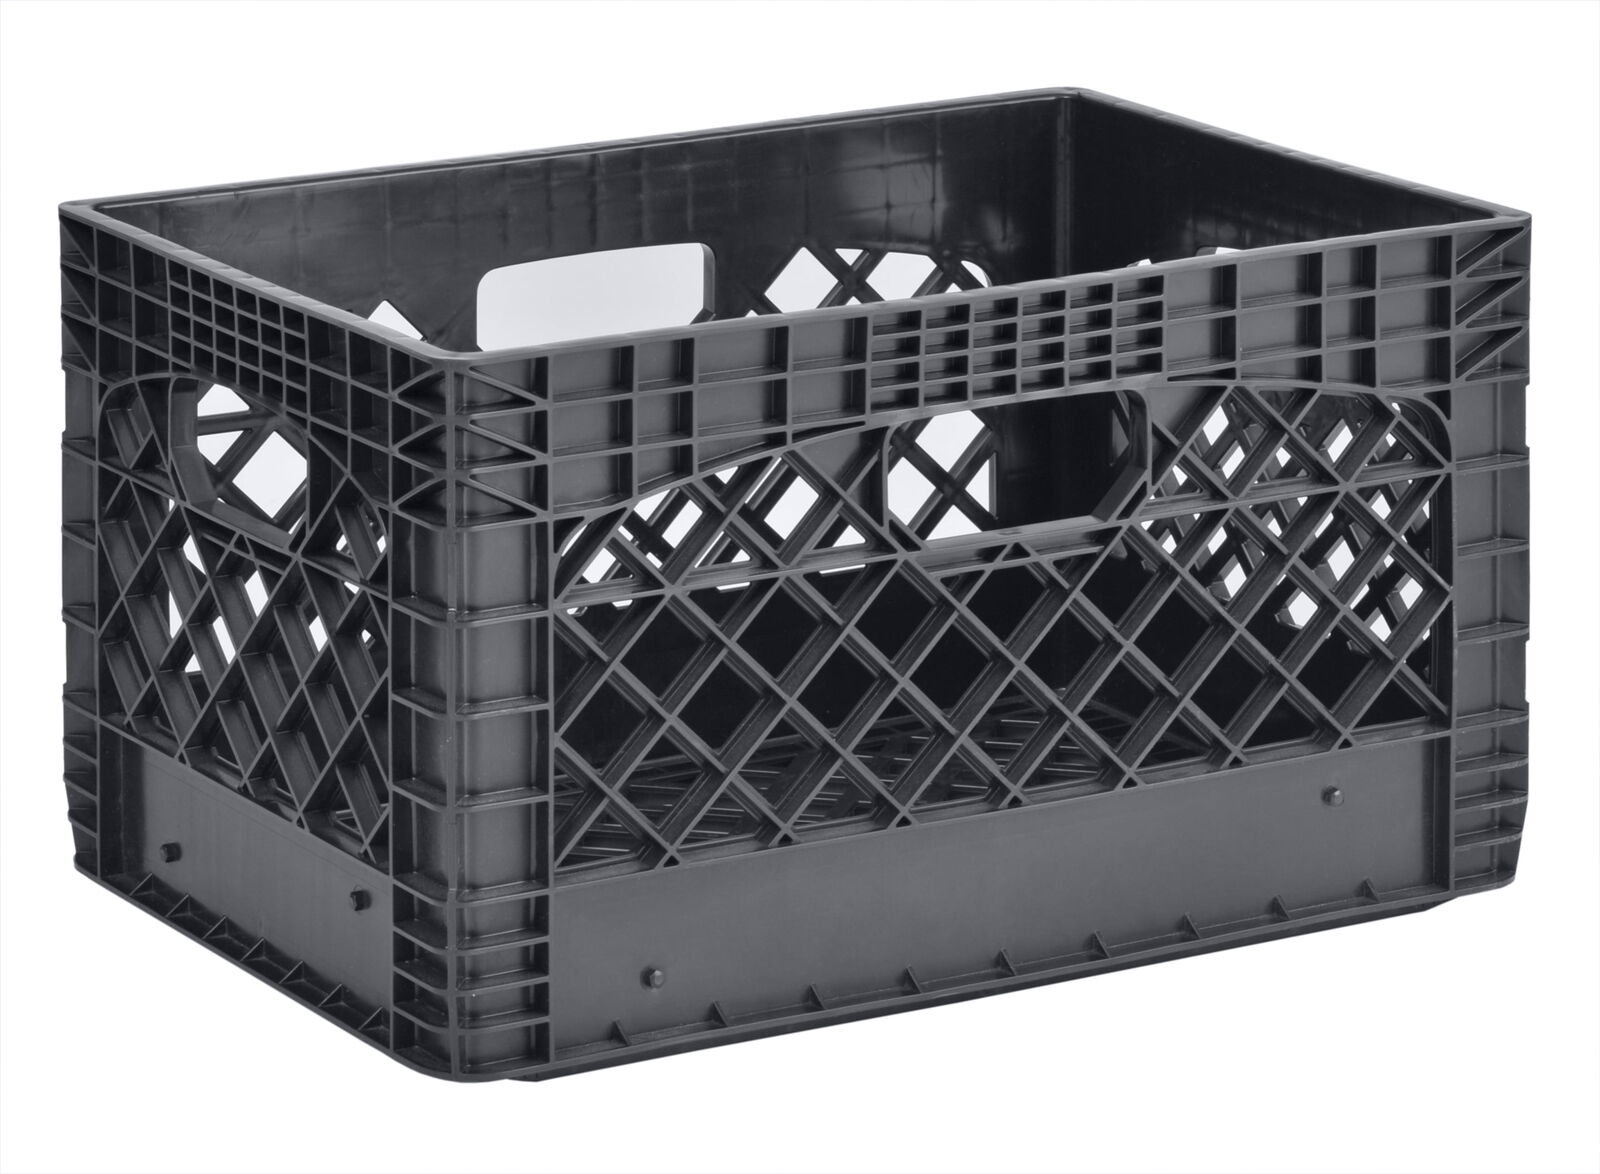 Juggernaut Storage 24QT Plastic Heavy-Duty Milk Crate, Black,Free Shipping.